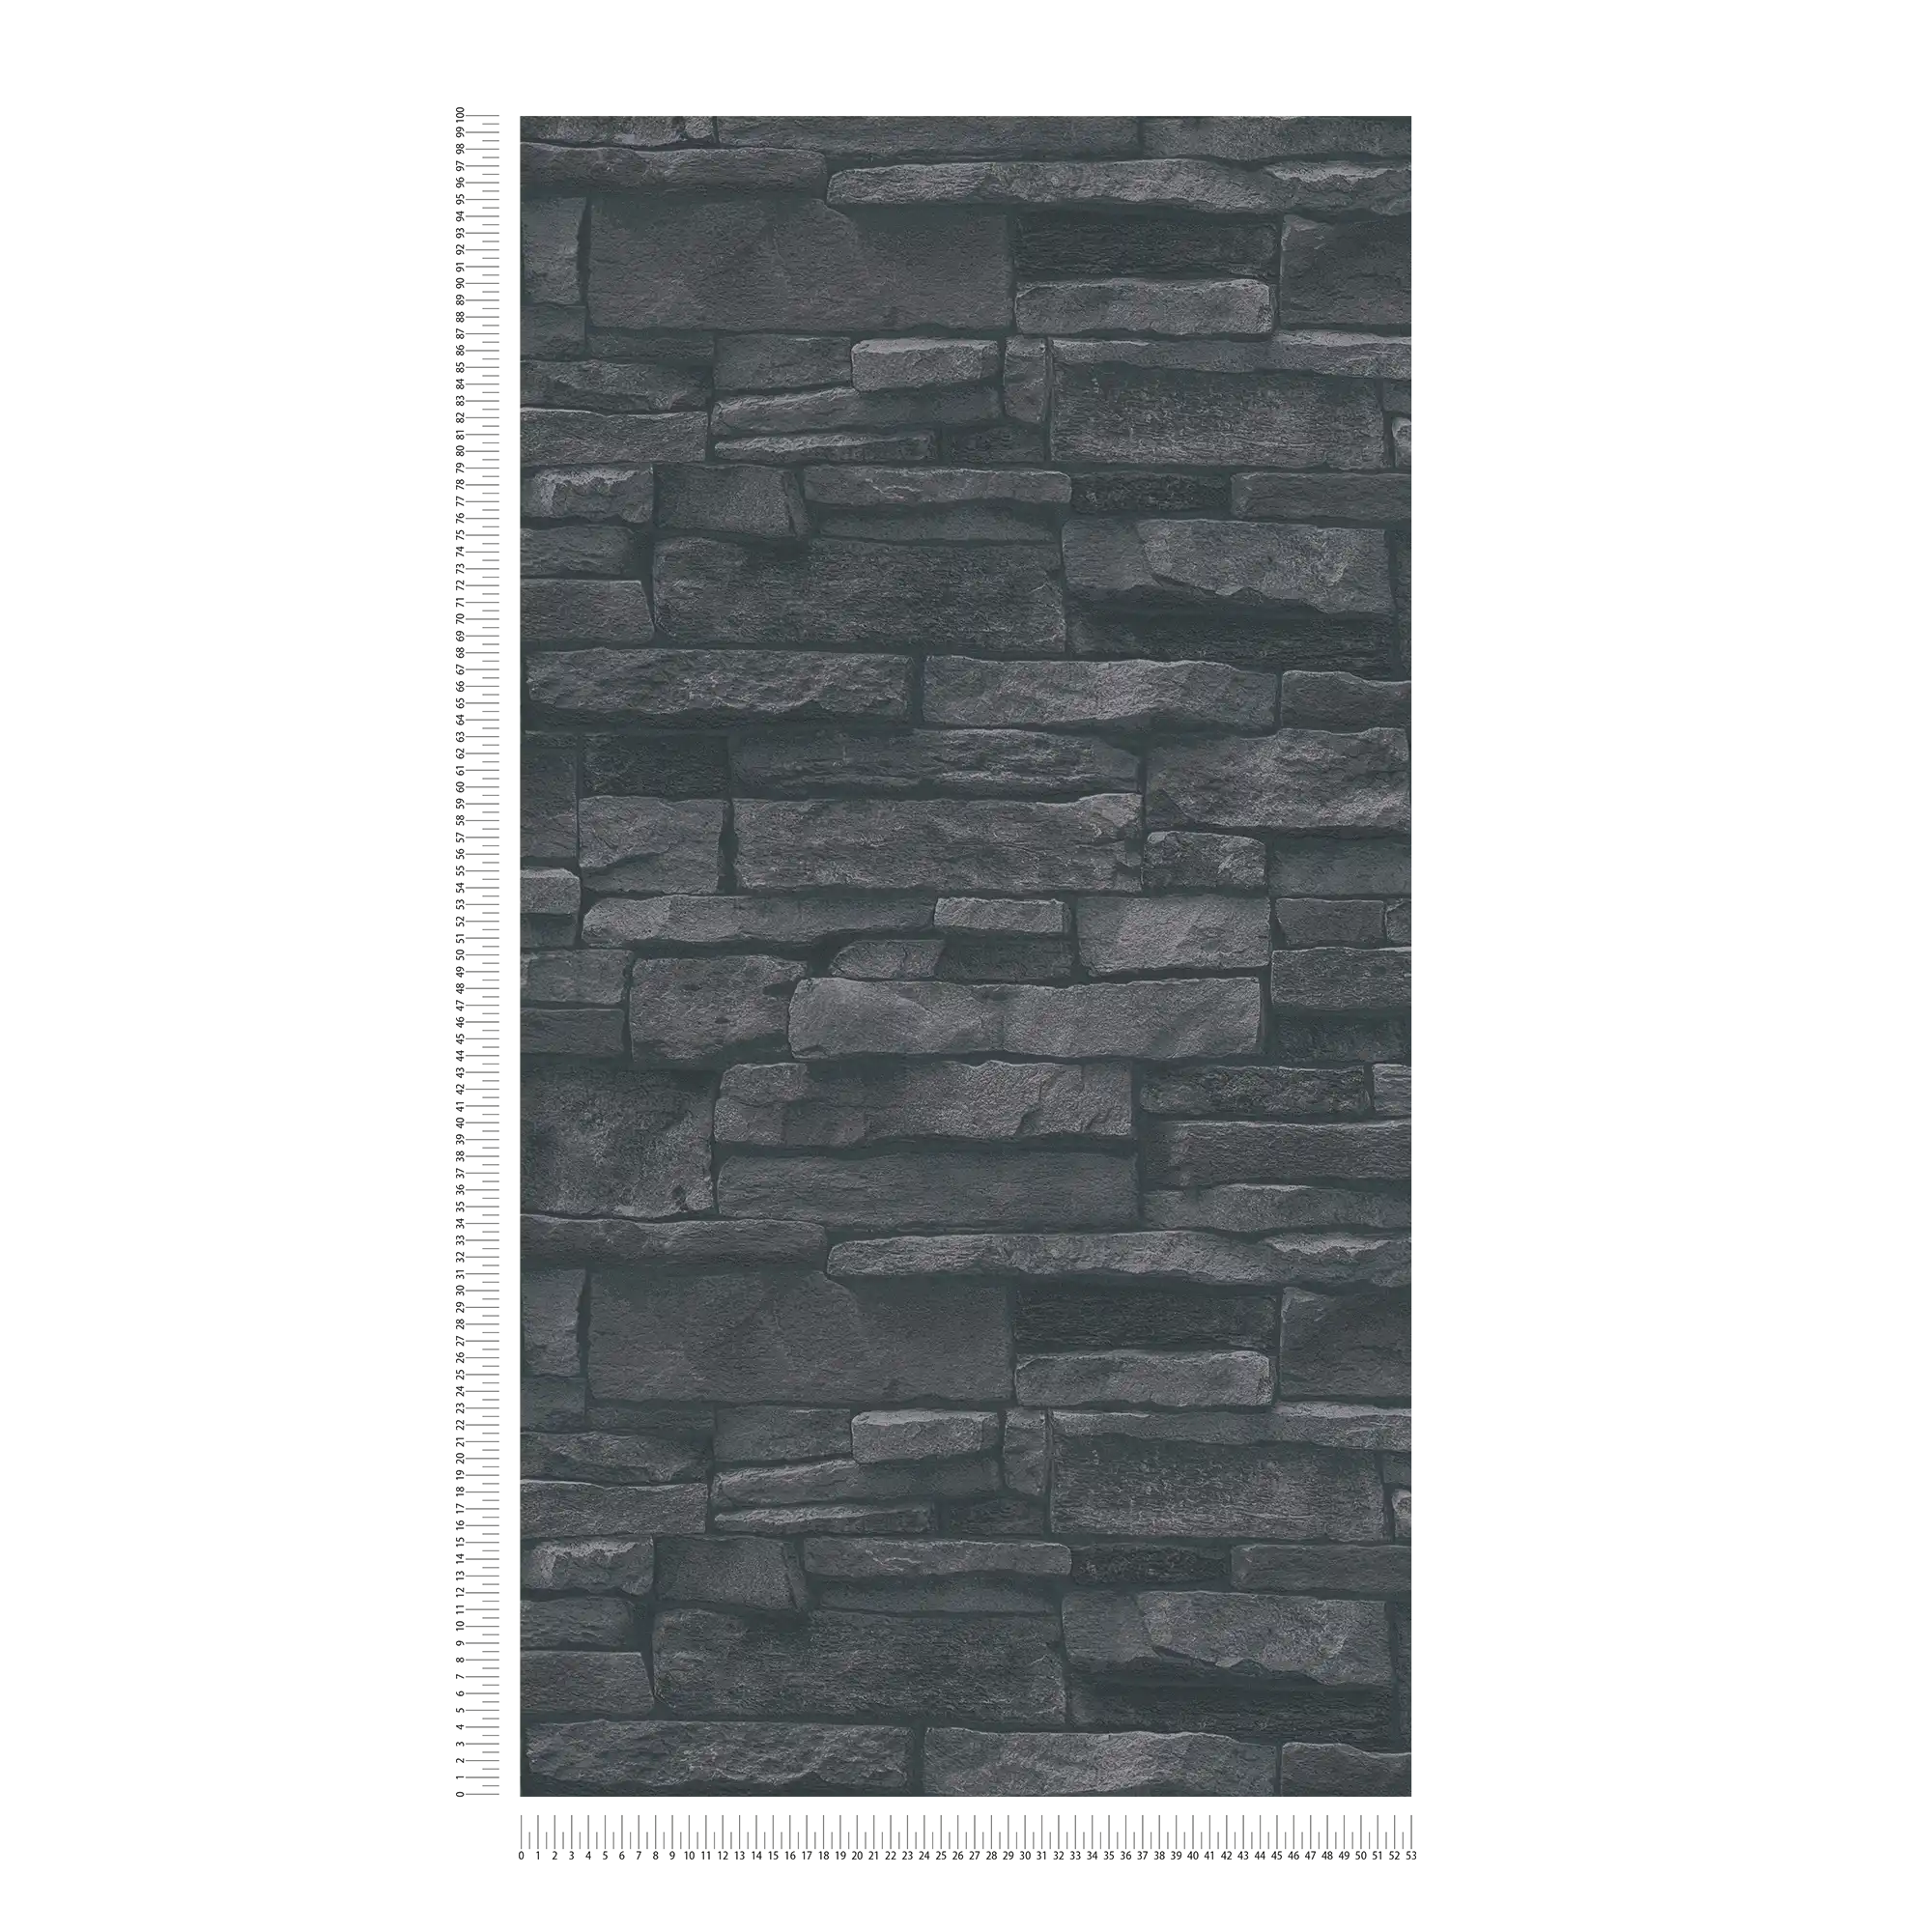             Stone optics wallpaper in black with 3D optics
        